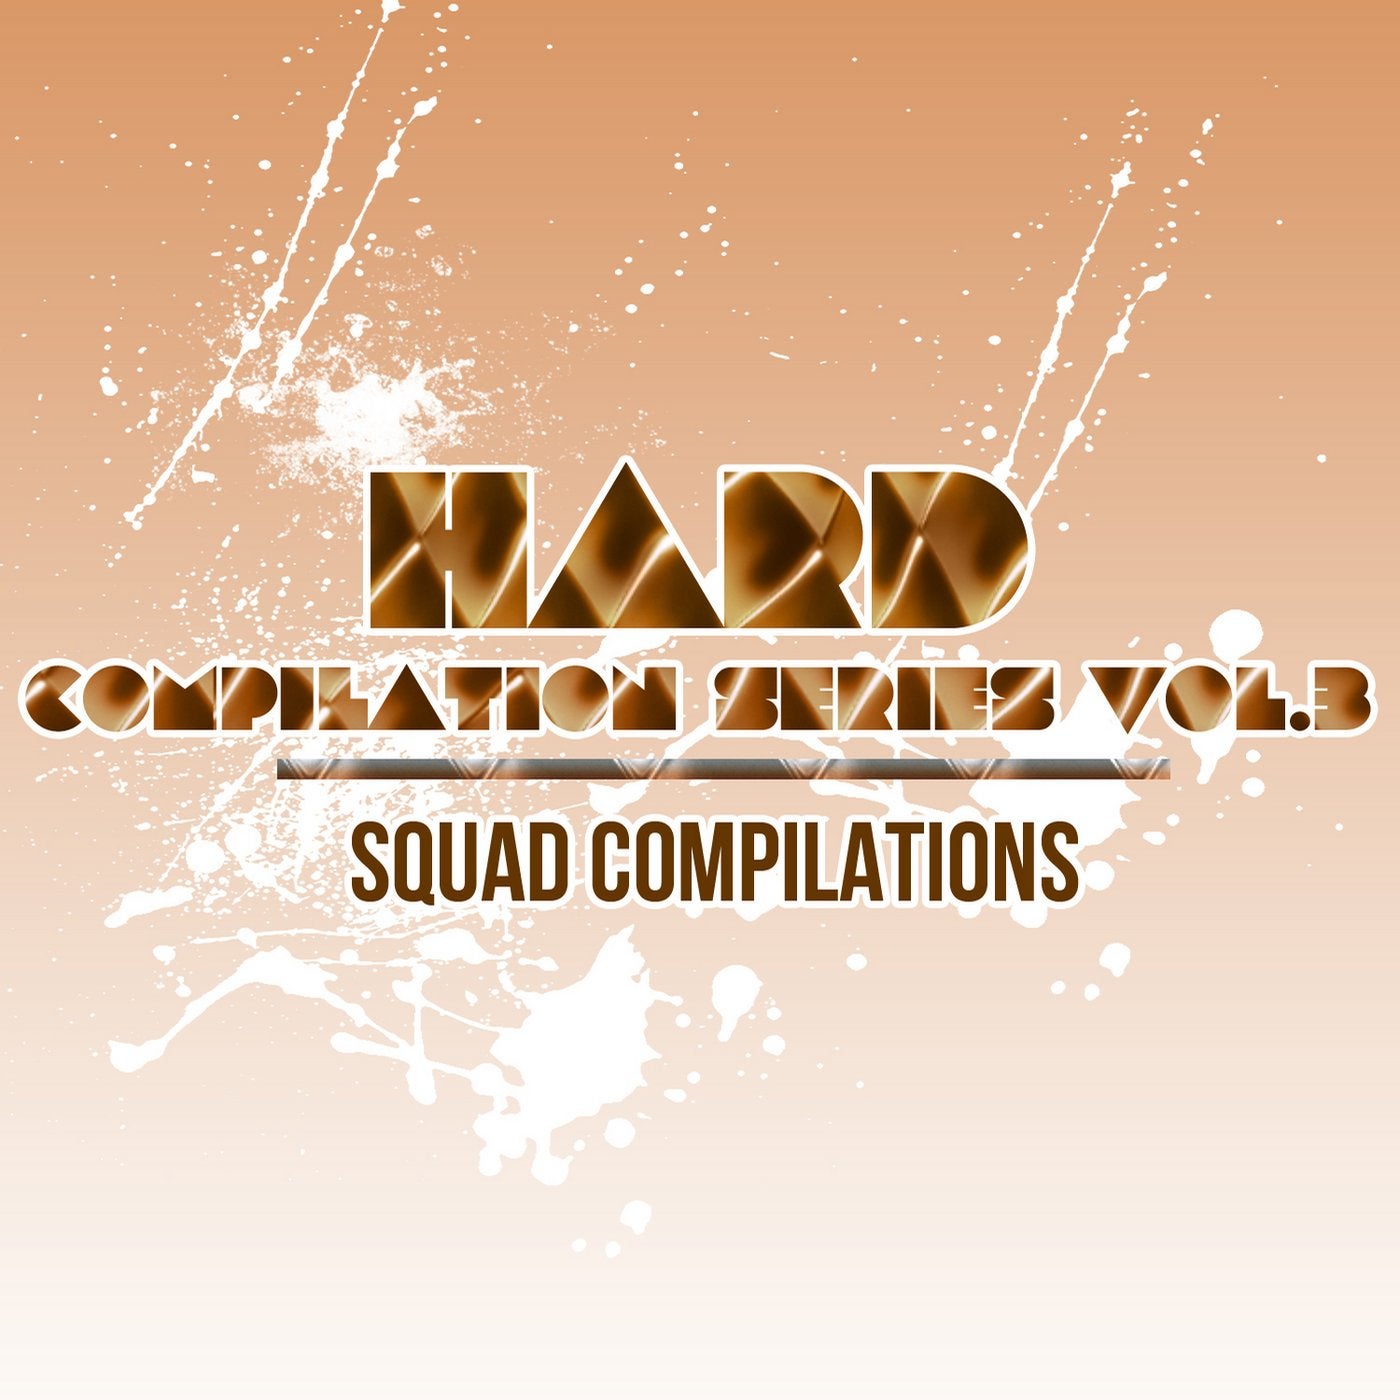 Hard Compilation Series, Vol.3